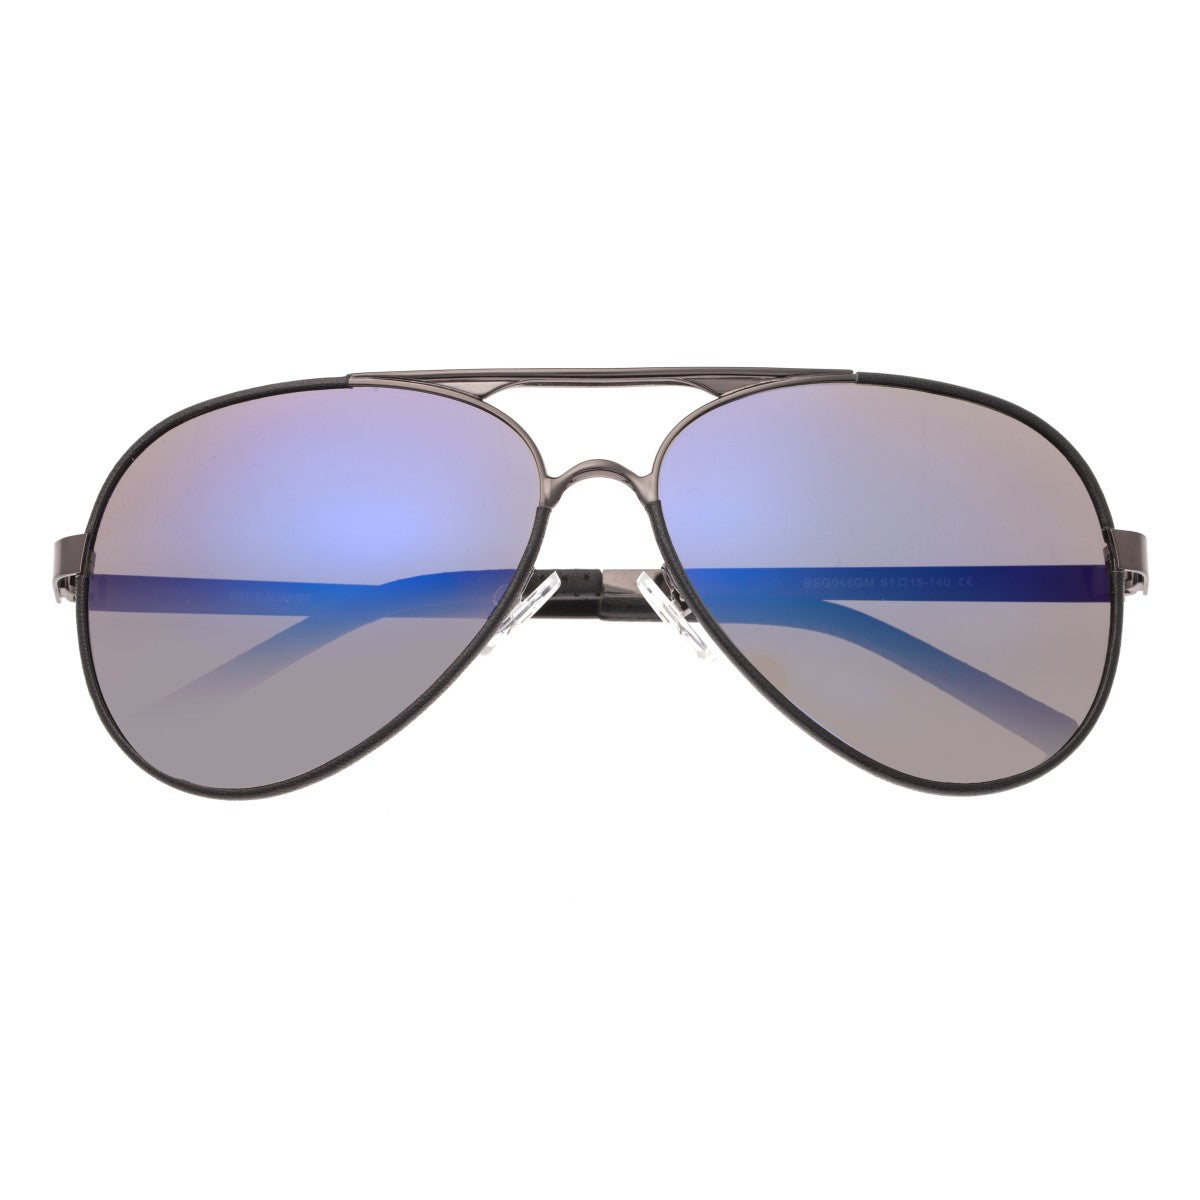 Breed Genesis Polarized Sunglasses - Gunmetal/Purple-Blue - BSG046GM